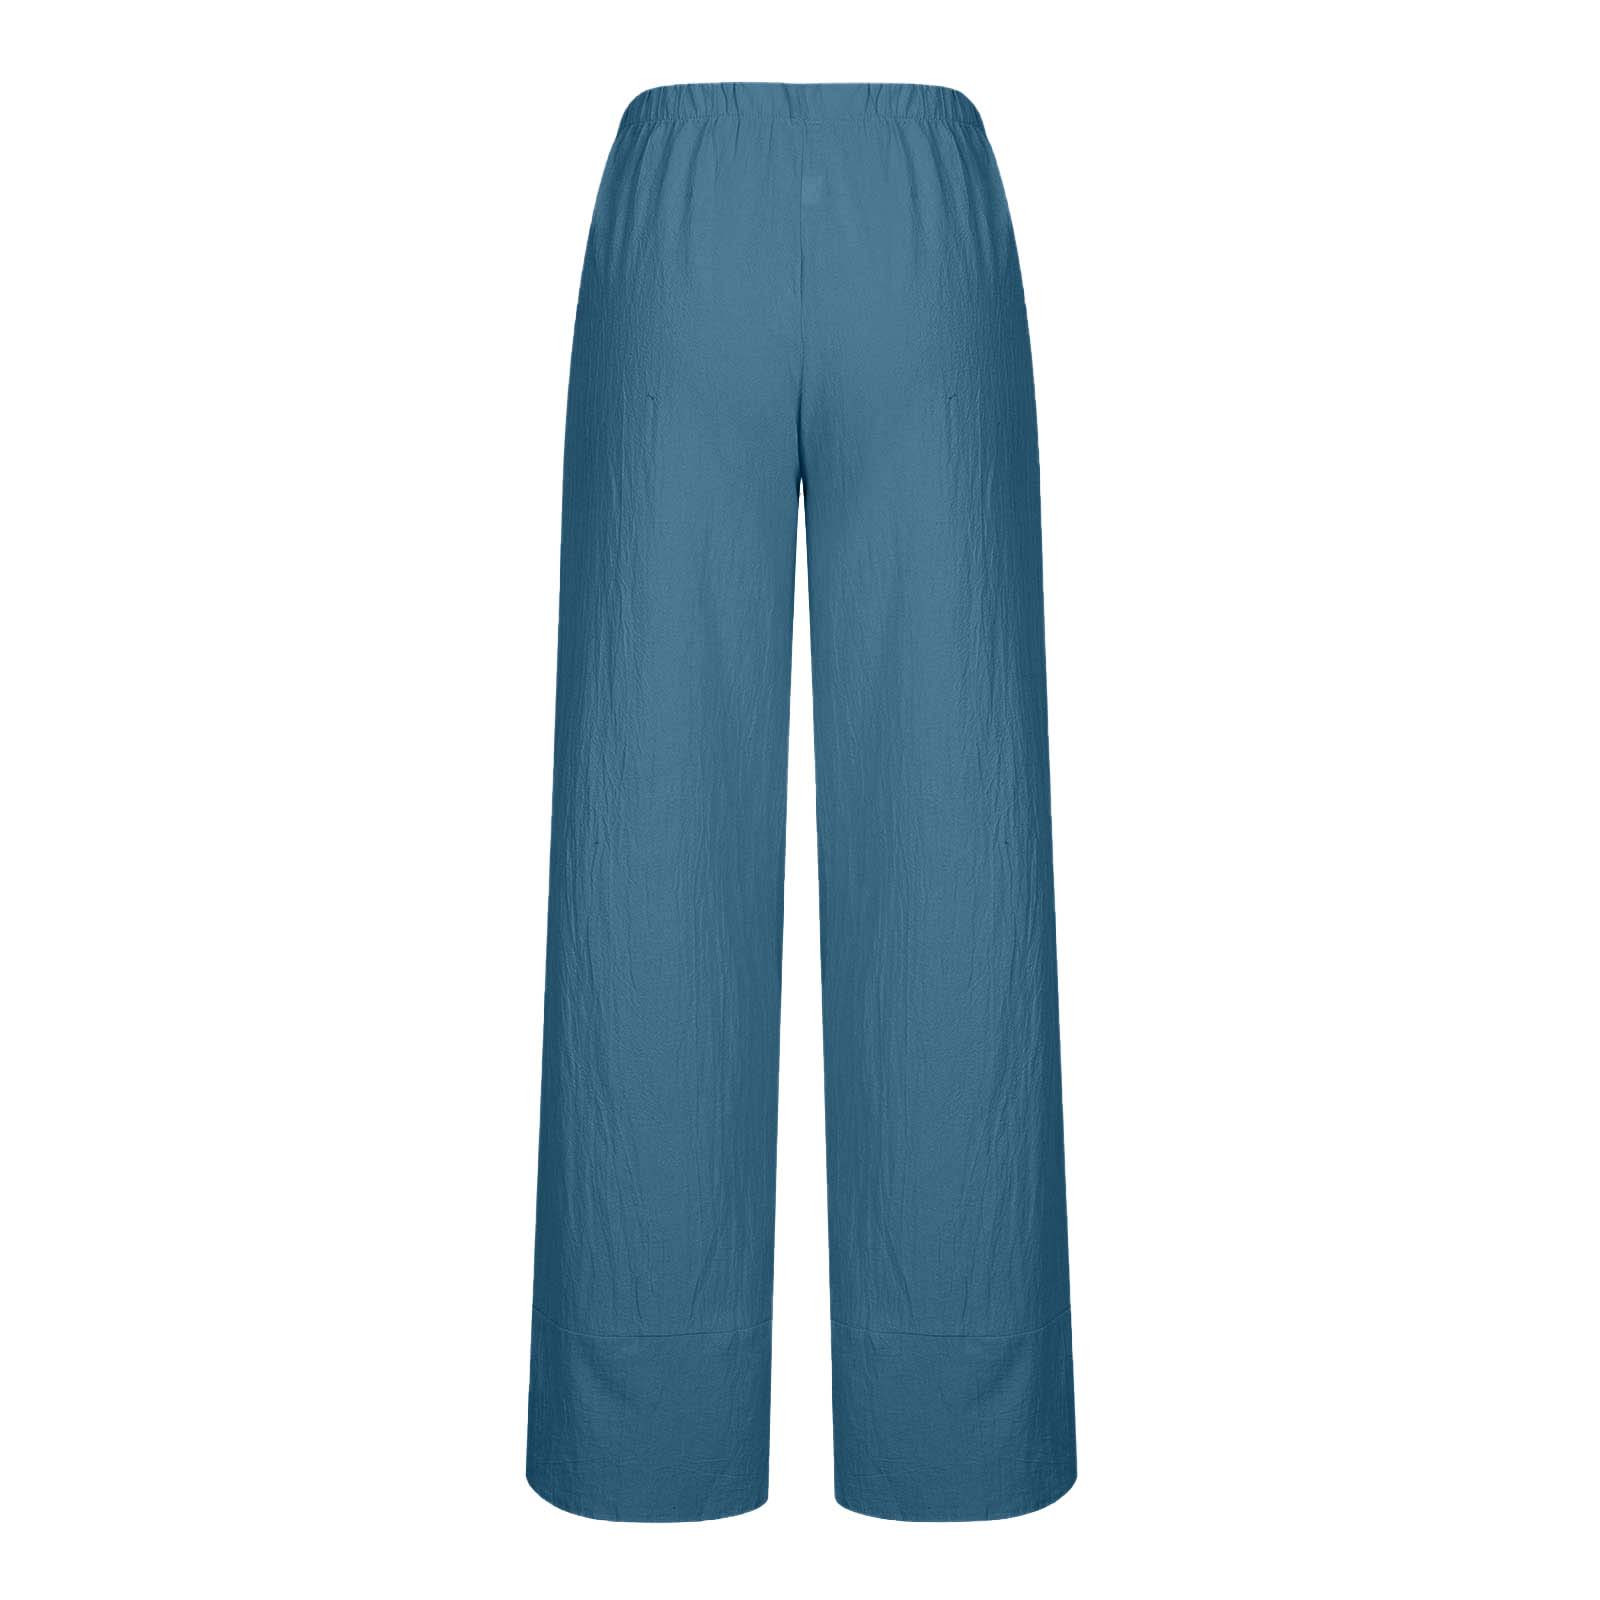 Women's Casual Summer Capri Pants Cotton Linen Elastic Waist Trousers ...